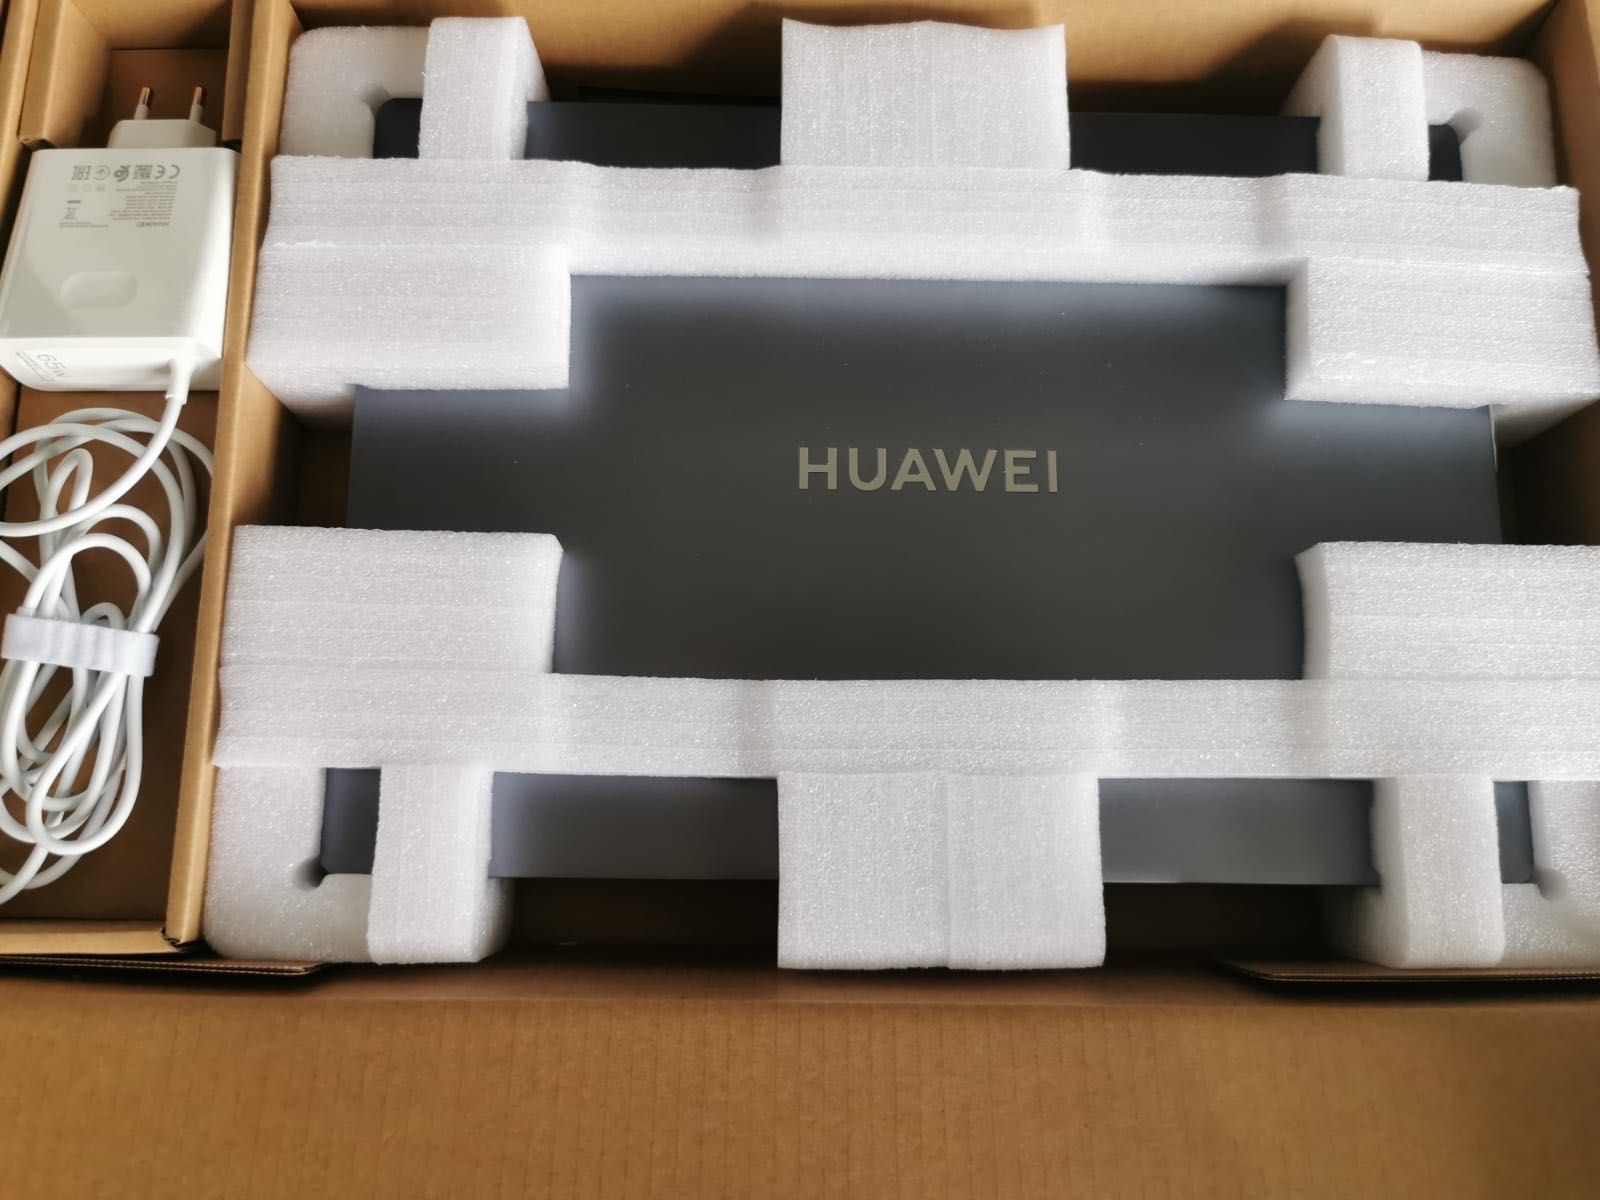 laptop Huawei MateBook D16 ( 2024) i5 16Gb+512 Gb (MCLF-X) Space Gray